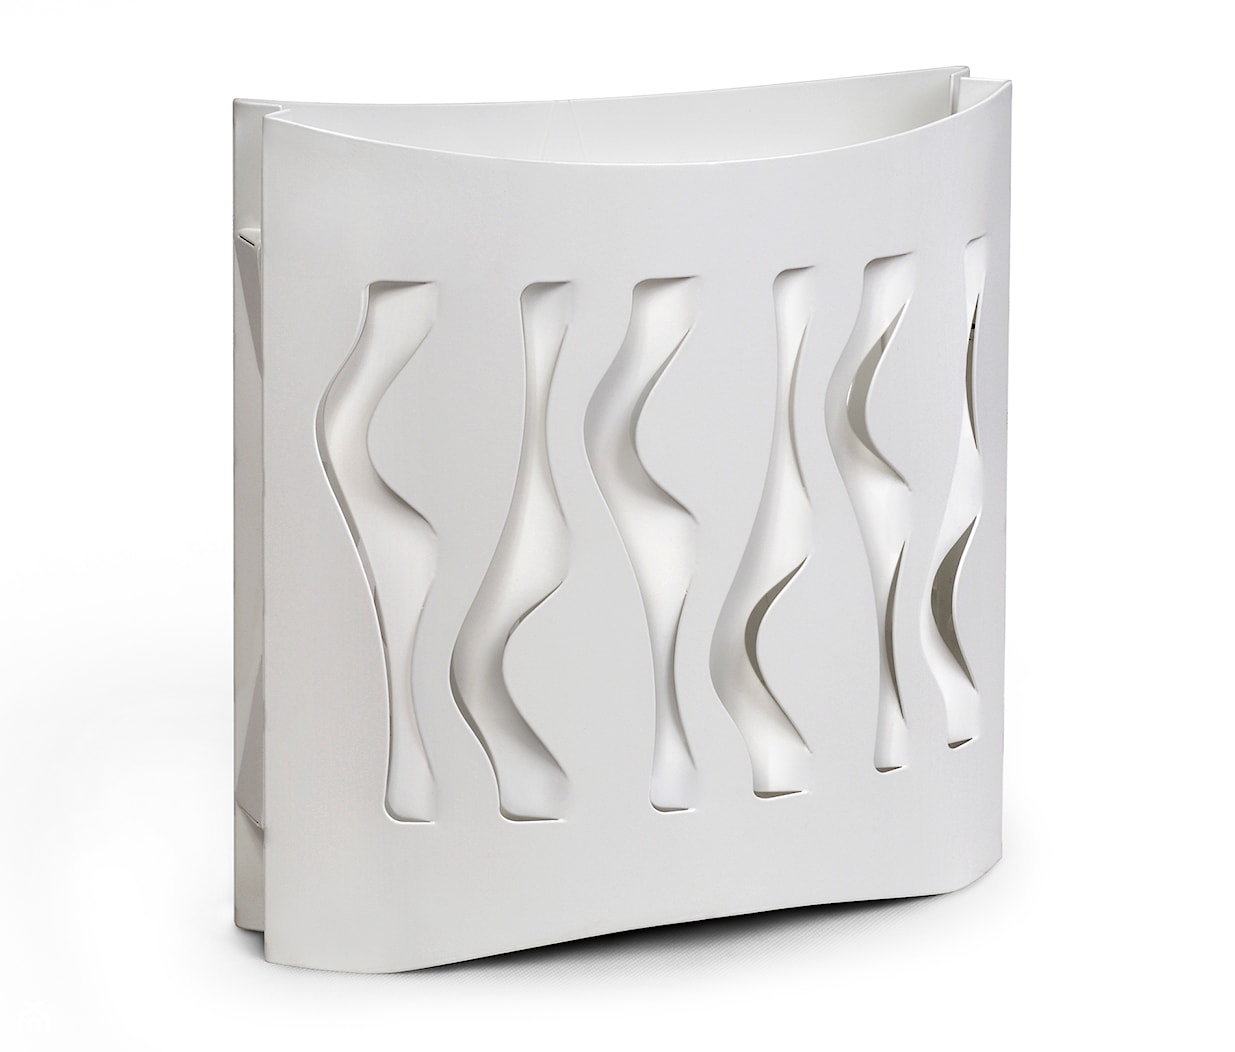 Lampa Decorative Wave - zdjęcie od Laskowscy Design - Homebook